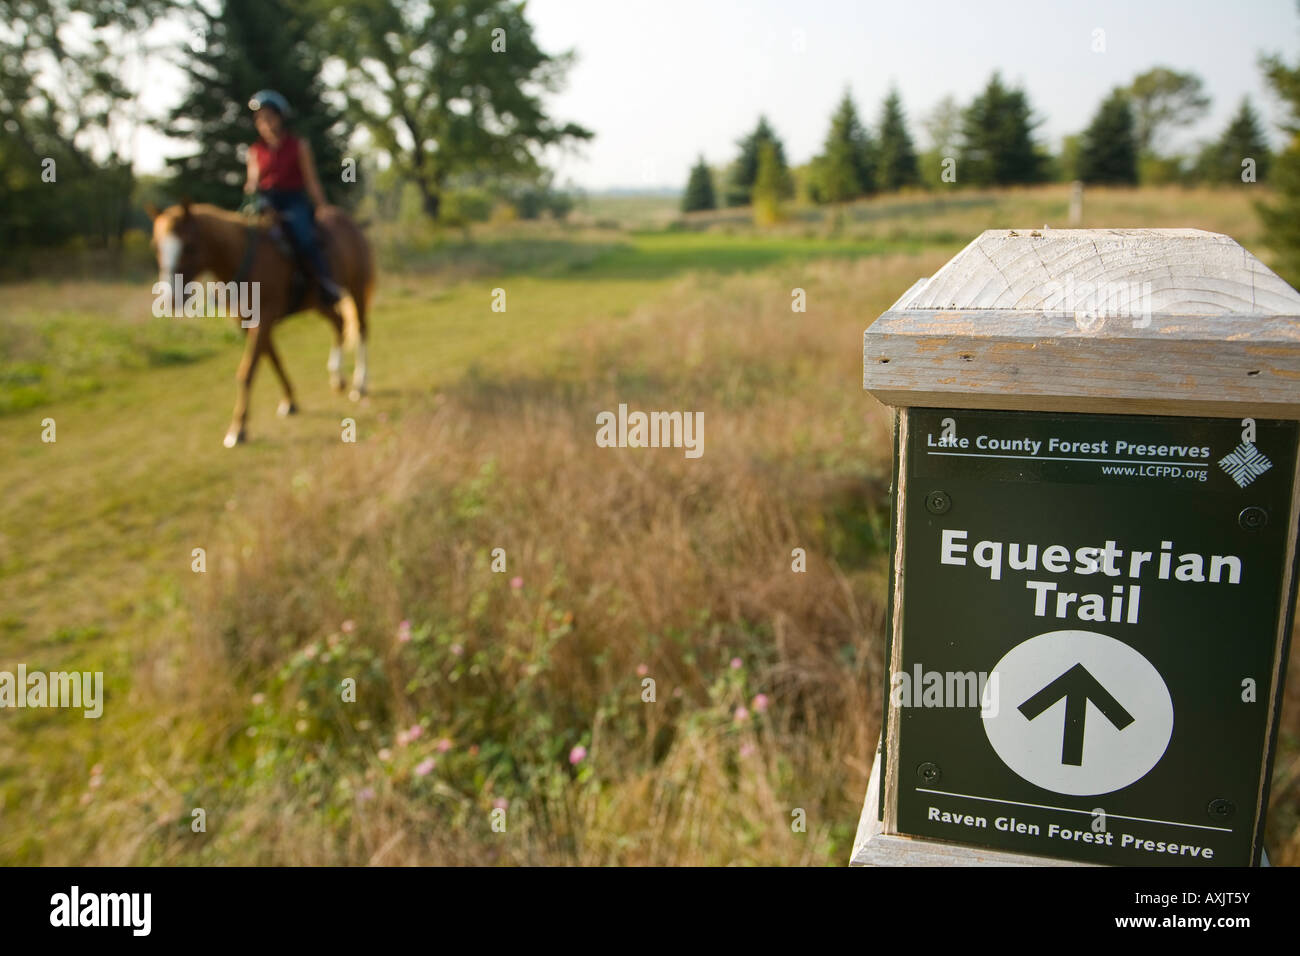 Mujer de Illinois en caballo en sendero de Raven Glen forest preserve sendero ecuestre signo Foto de stock